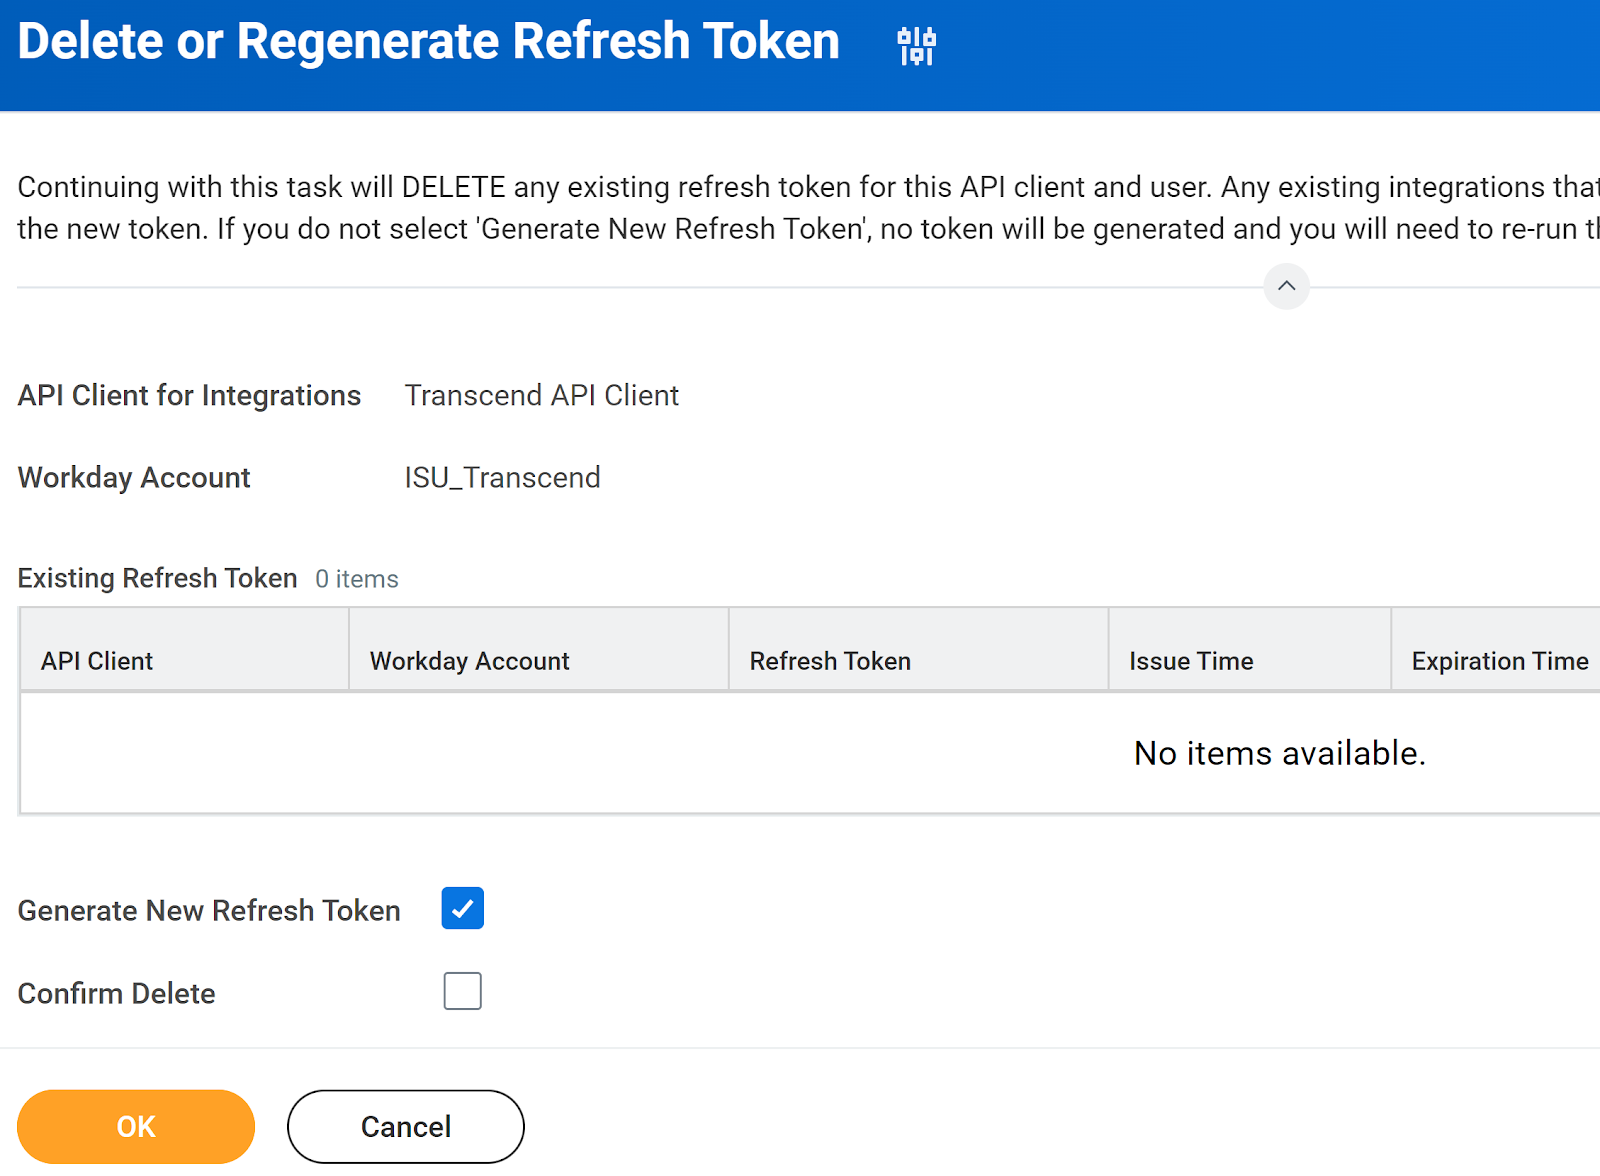 Example of "Delete or Regenerate Refresh Token"